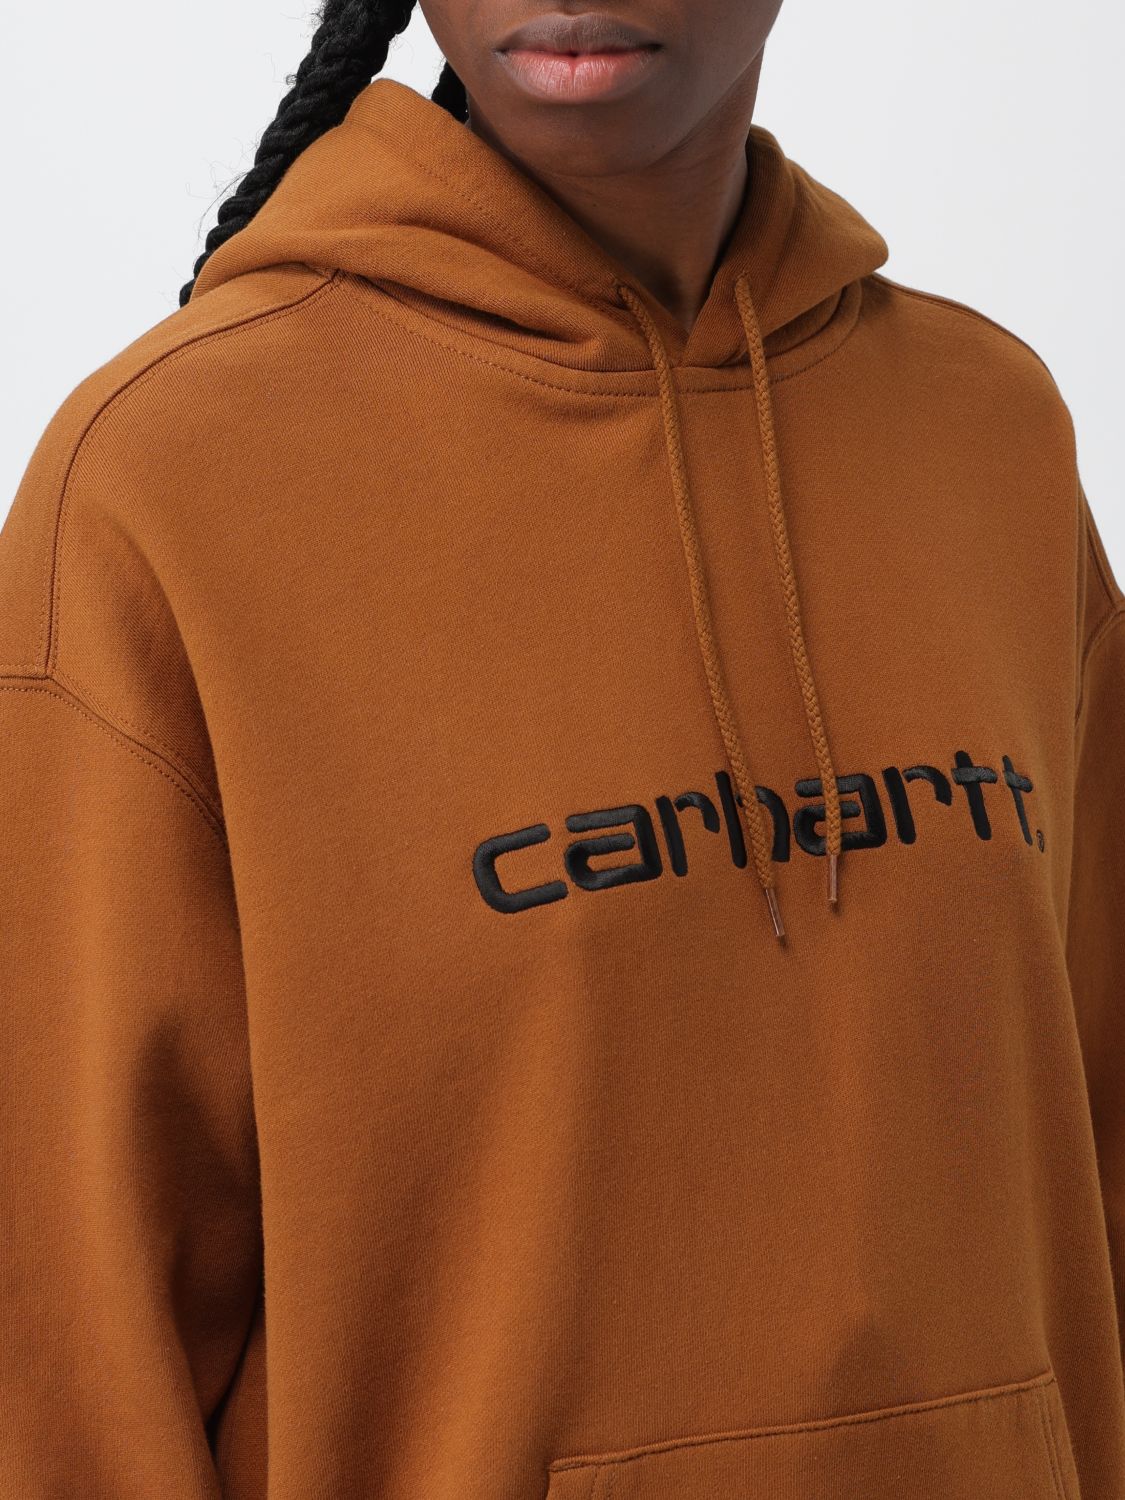 CARHARTT WIP: Sweat-shirt femme - Marron  Sweat-Shirt Carhartt Wip I032449  en ligne sur